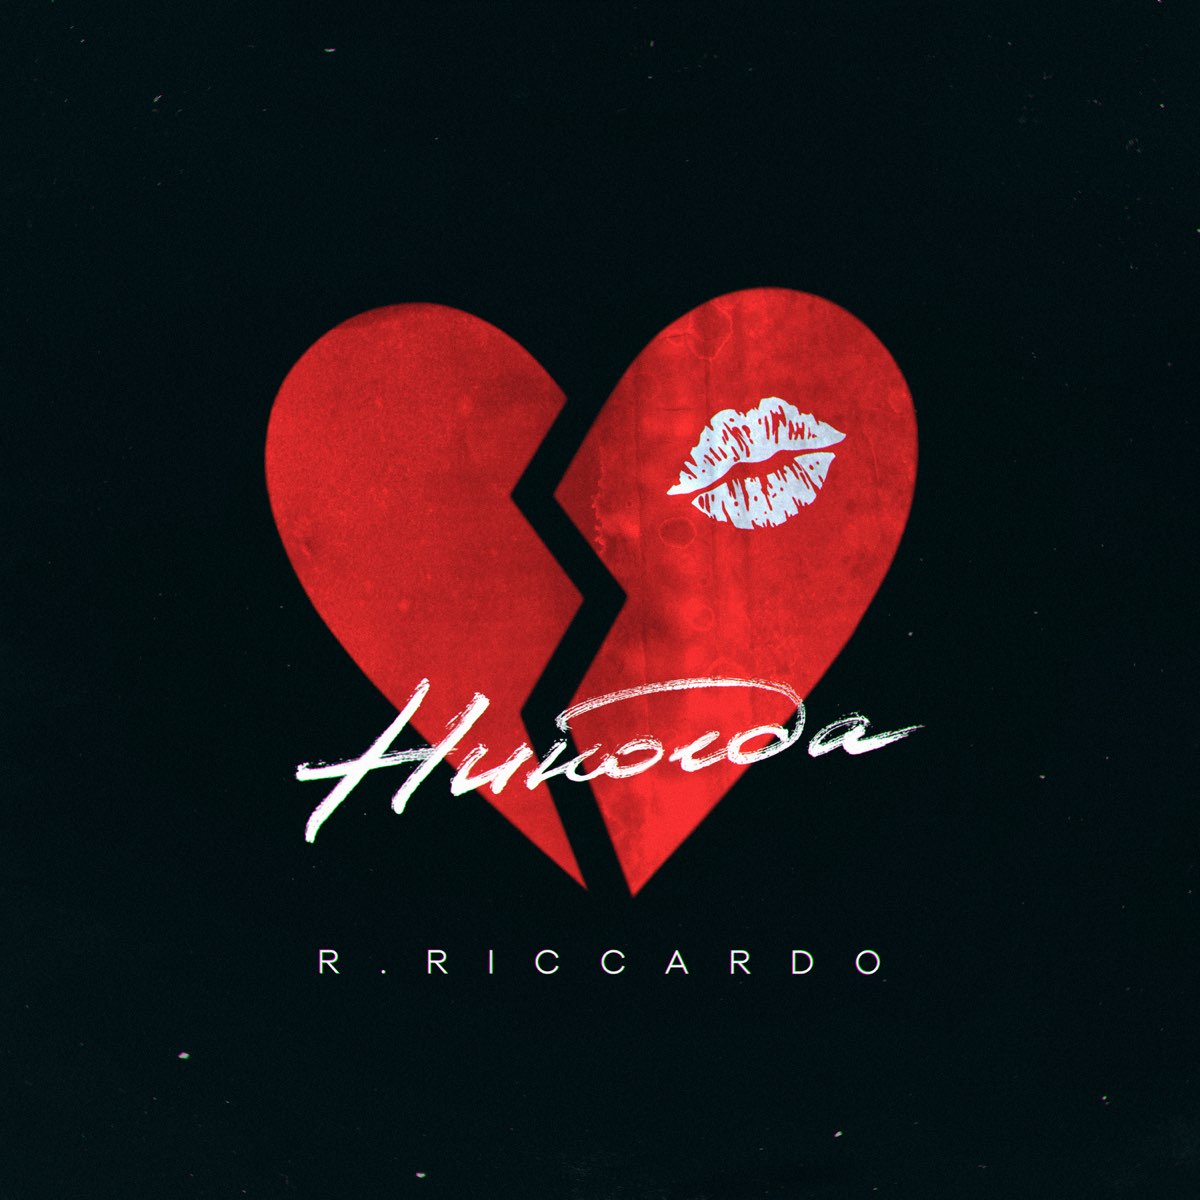 Песня между нами r riccardo. R.Riccardo. R.Riccardo певец. R.Riccardo фото. R. Riccardo песни.